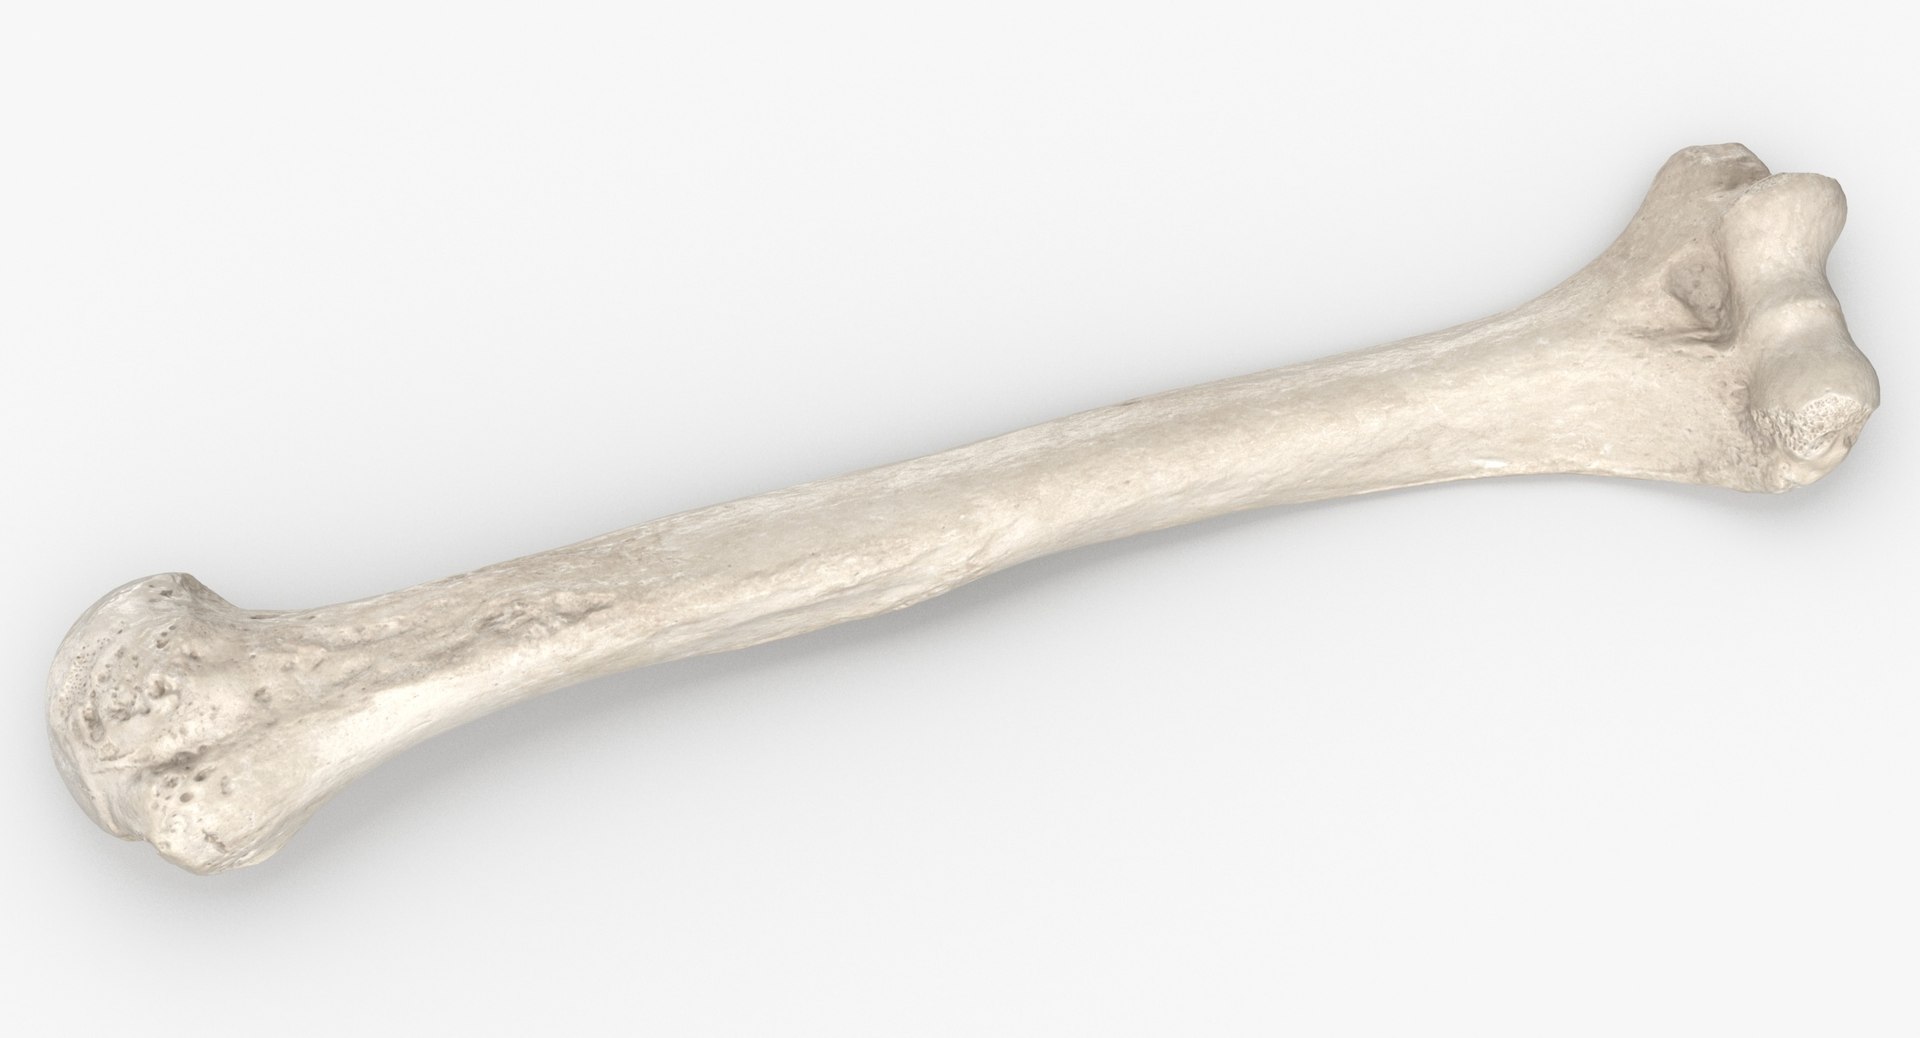 Human Humerus Bone 01 Model - TurboSquid 1539324